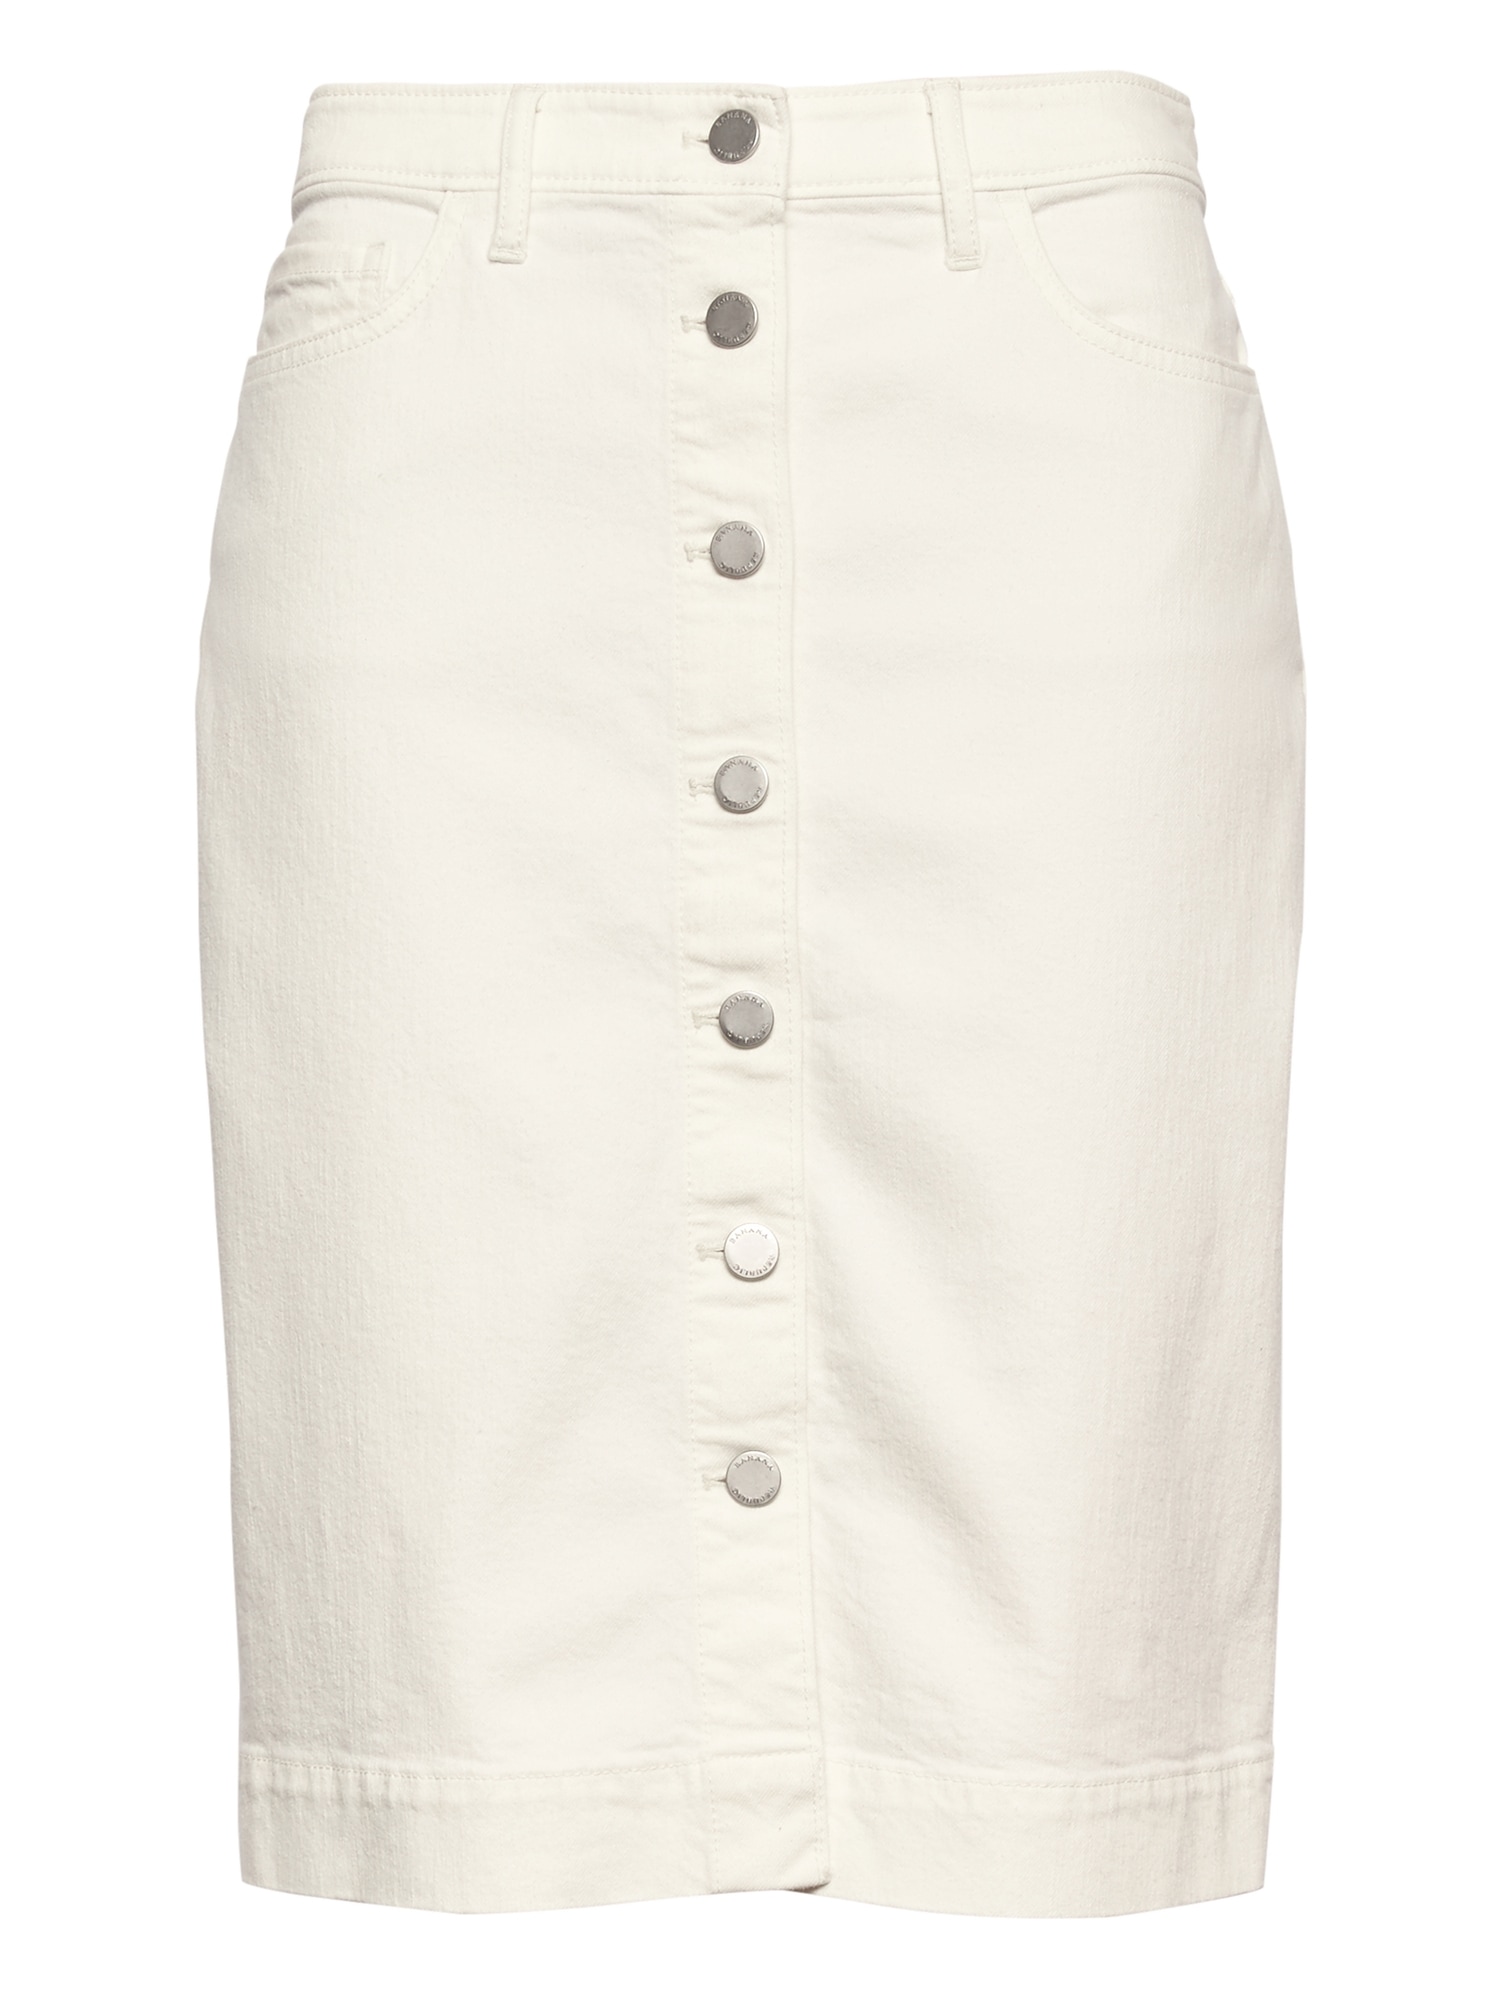 Petite Button-Front Denim Skirt